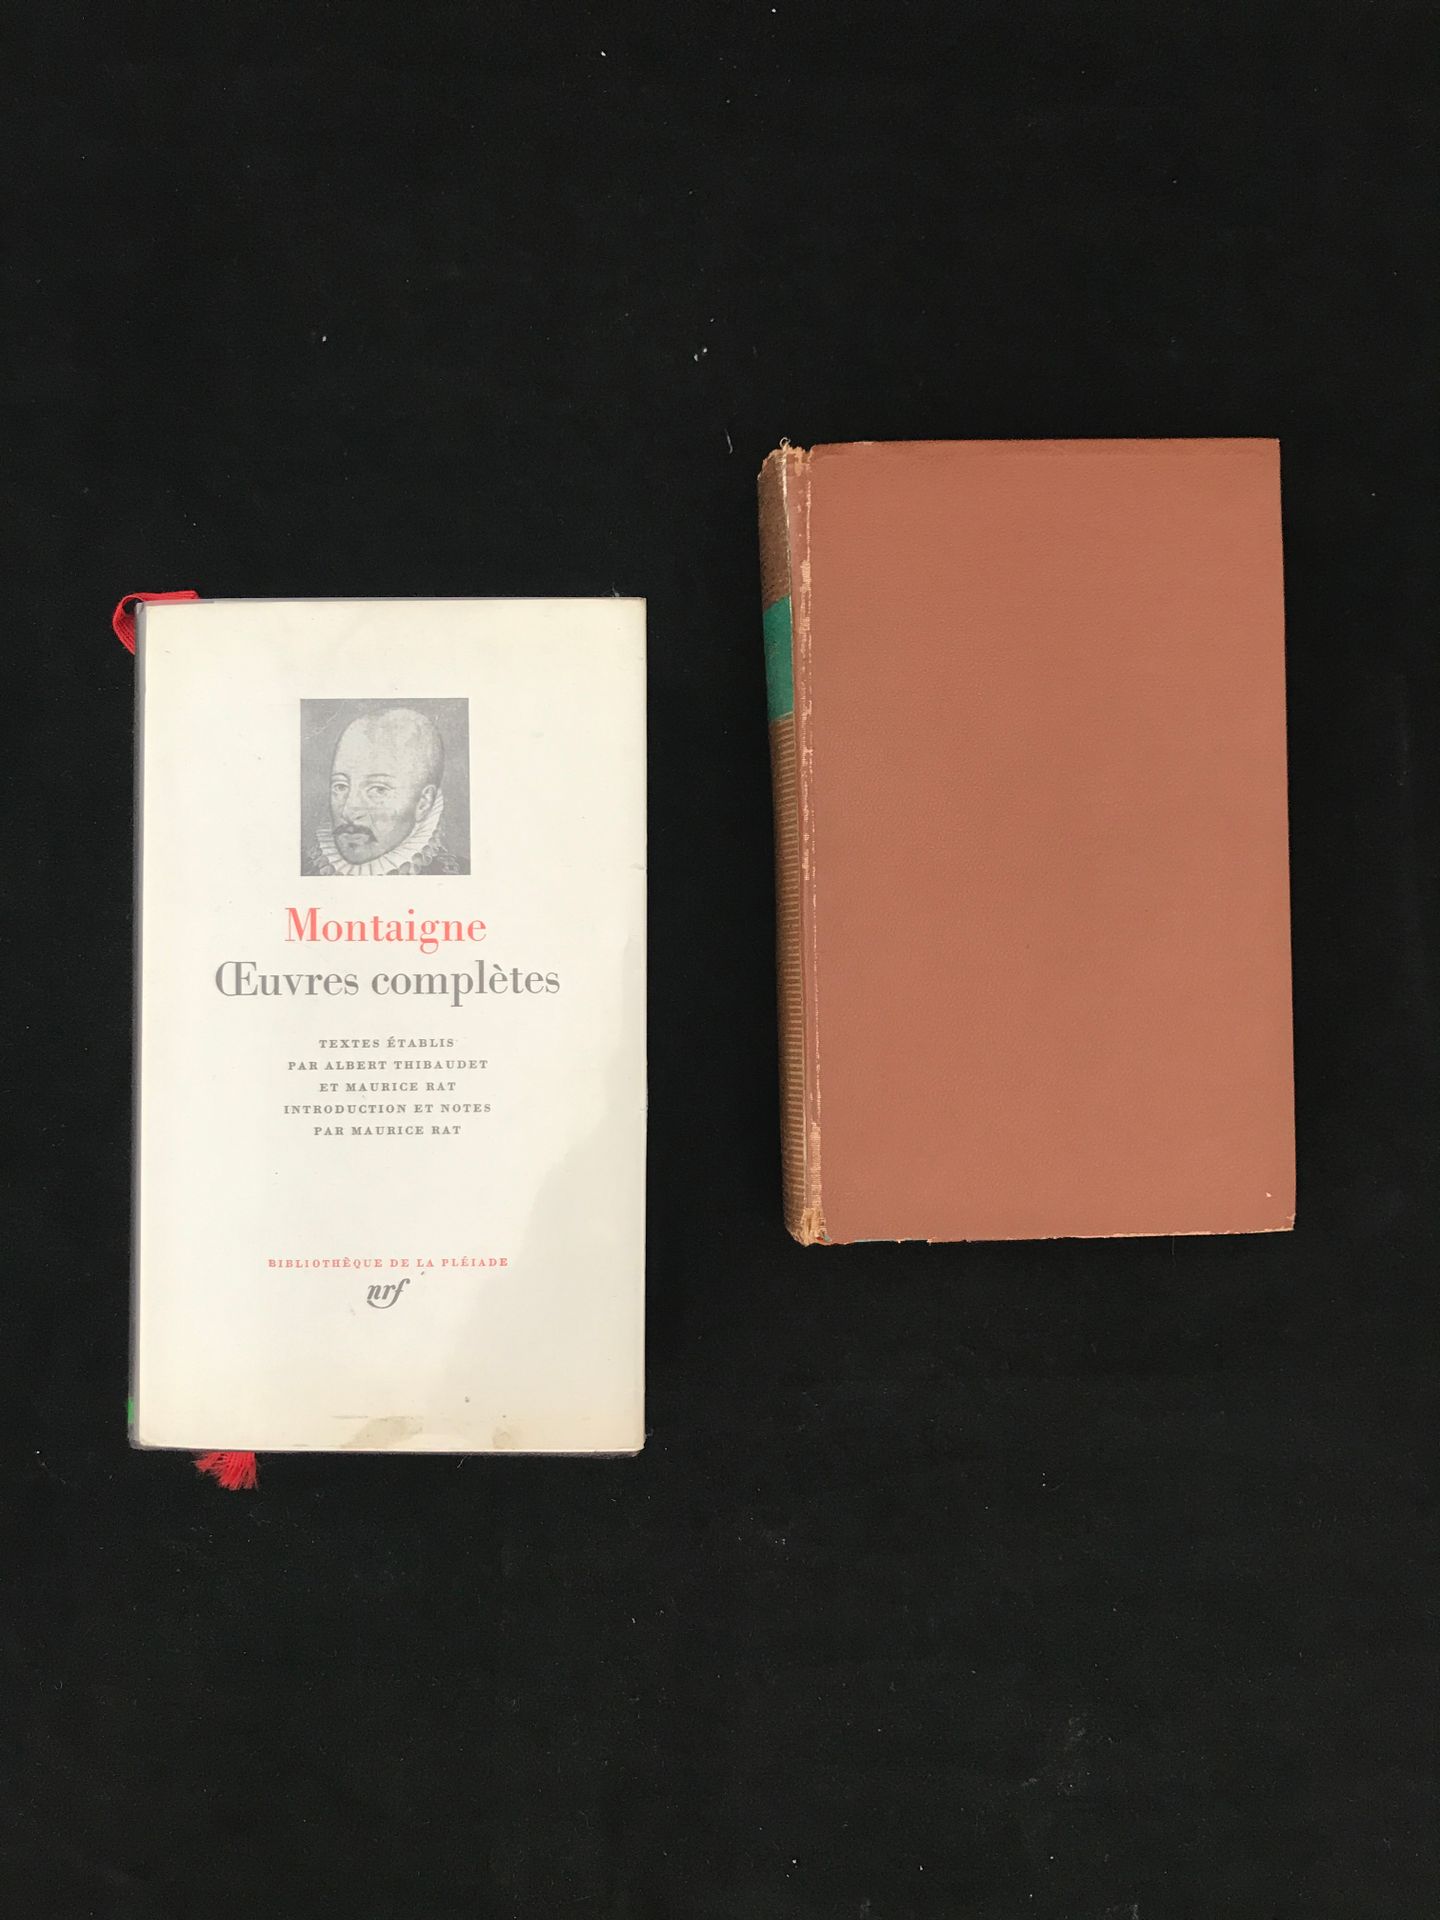 Null La Pléiade》，一套两册，包括。

- 蒙泰尼，"作品集"（缺封皮）。

- André GIDE, "Journal